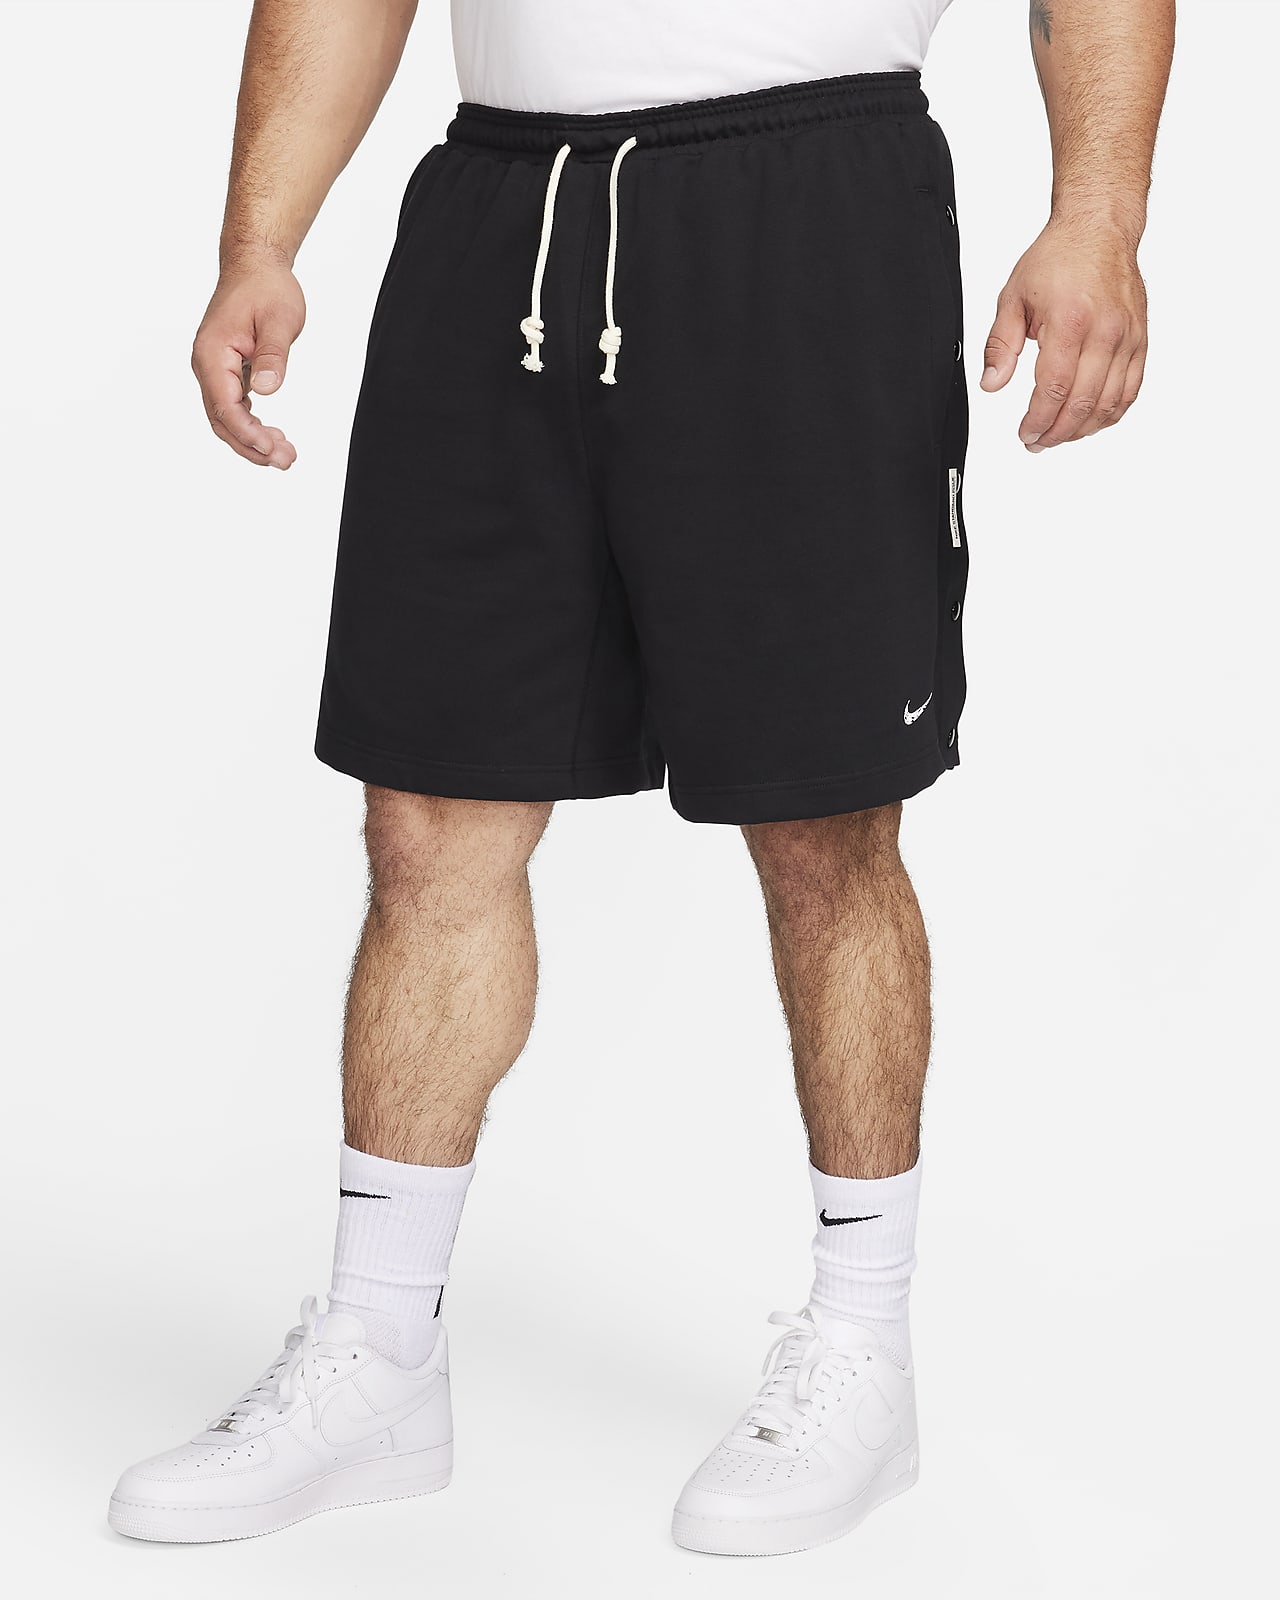 Shorts Nike Dri Fit Classic - Compre Agora